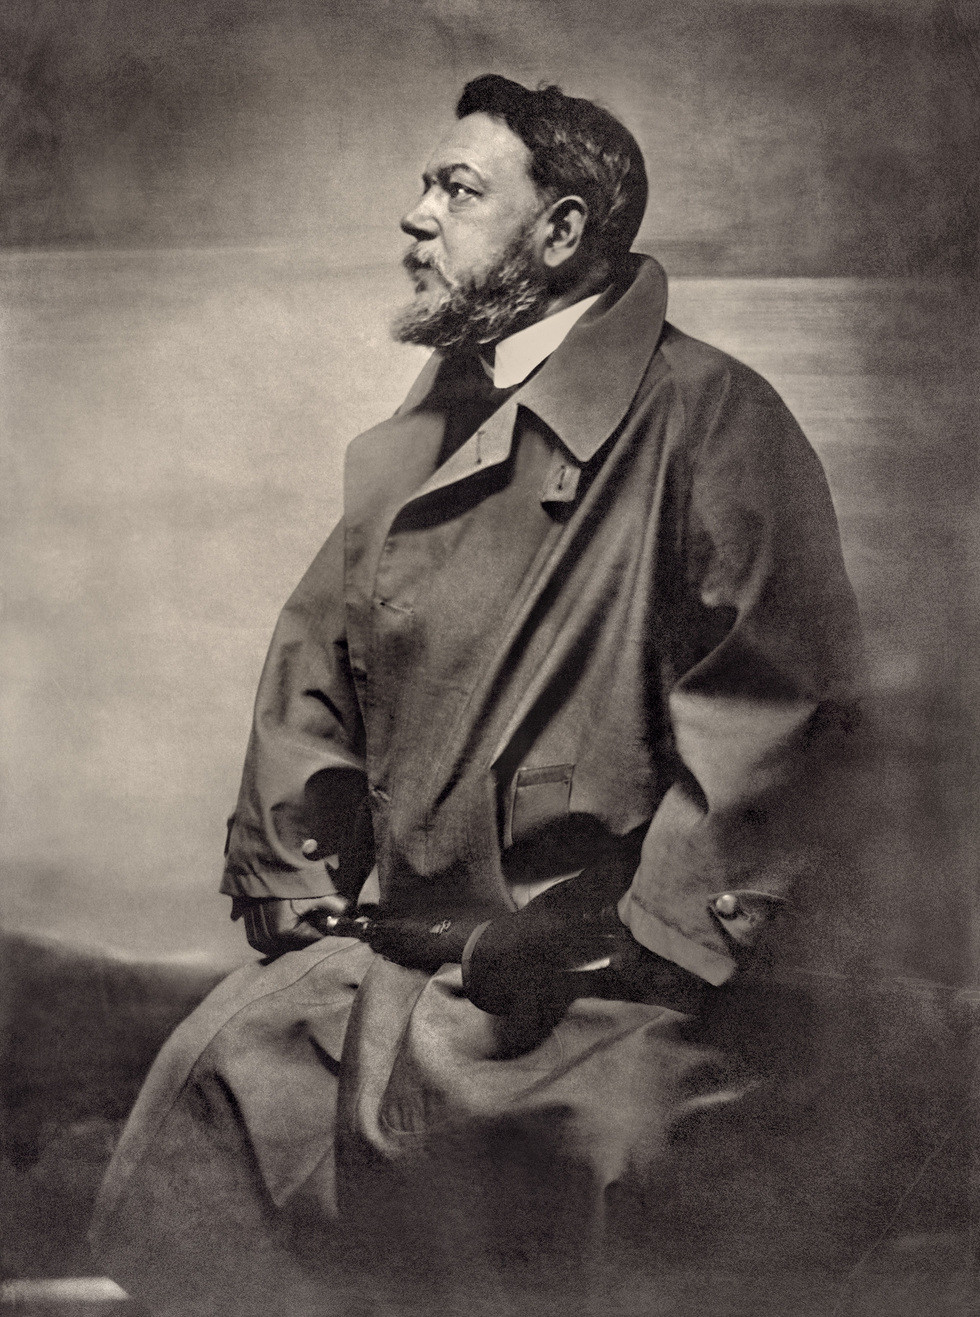 Joaquín Sorolla, retratado por la fotógrafa Gertrude Käsebier en Nueva York hacia 1909